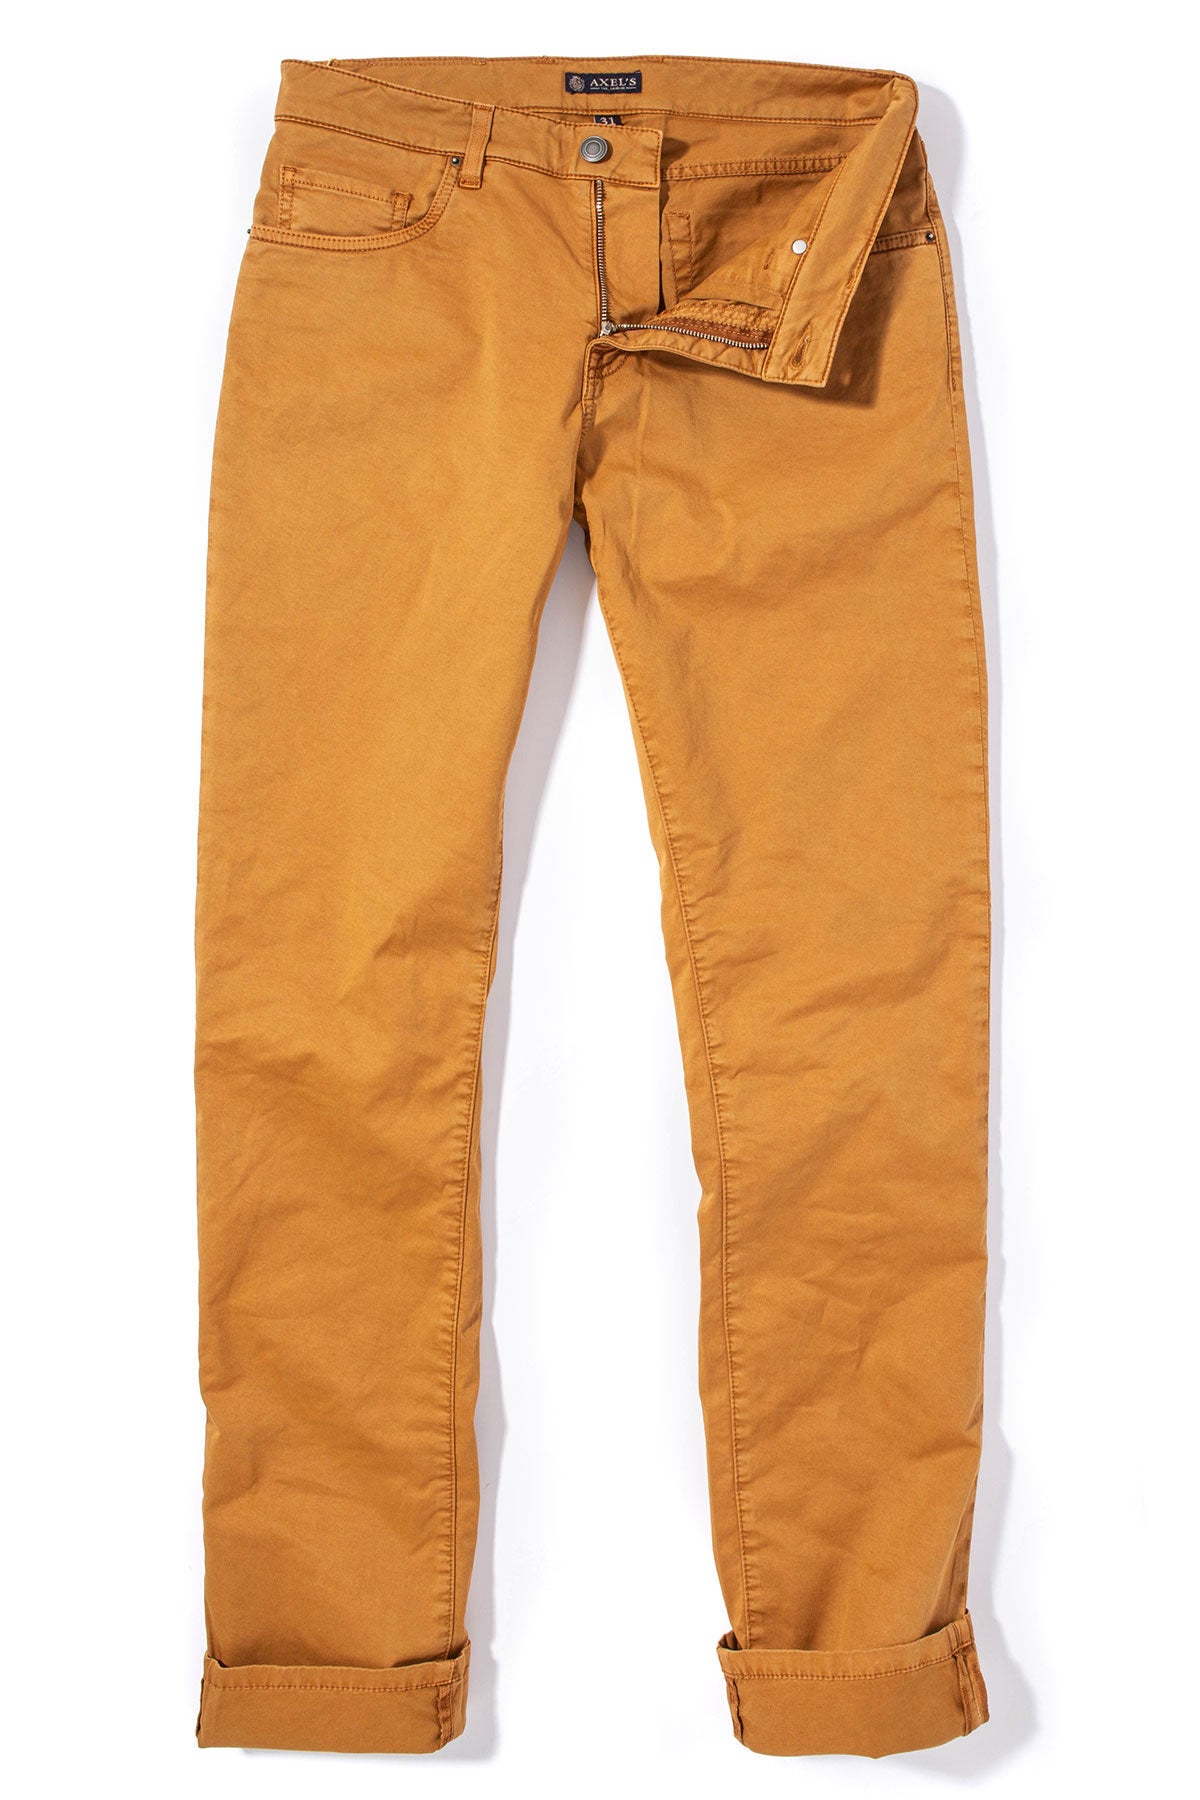 Flagstaff Stretch Cotton Twill in Ochra | Mens - Pants - 5 Pocket | Axels Premium Denim